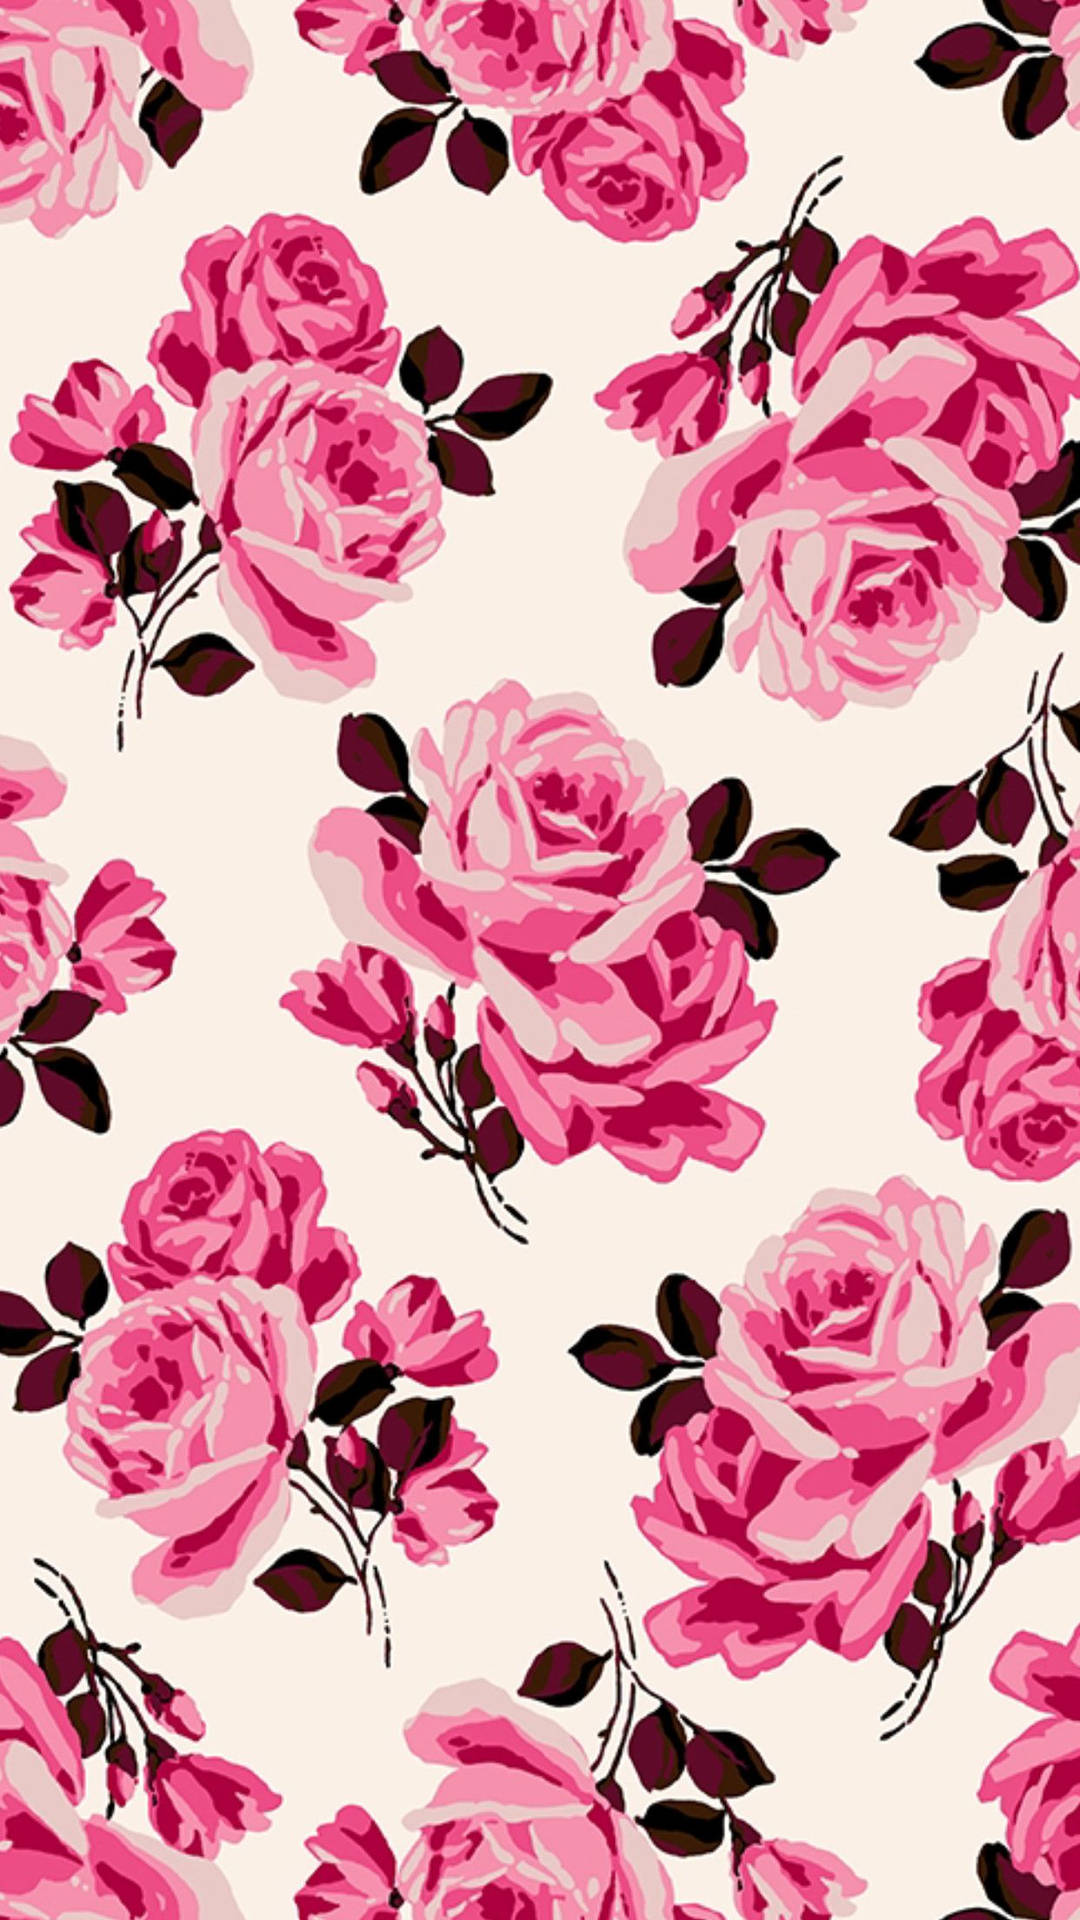 50+] Pretty Girly Wallpapers for iPhone - WallpaperSafari